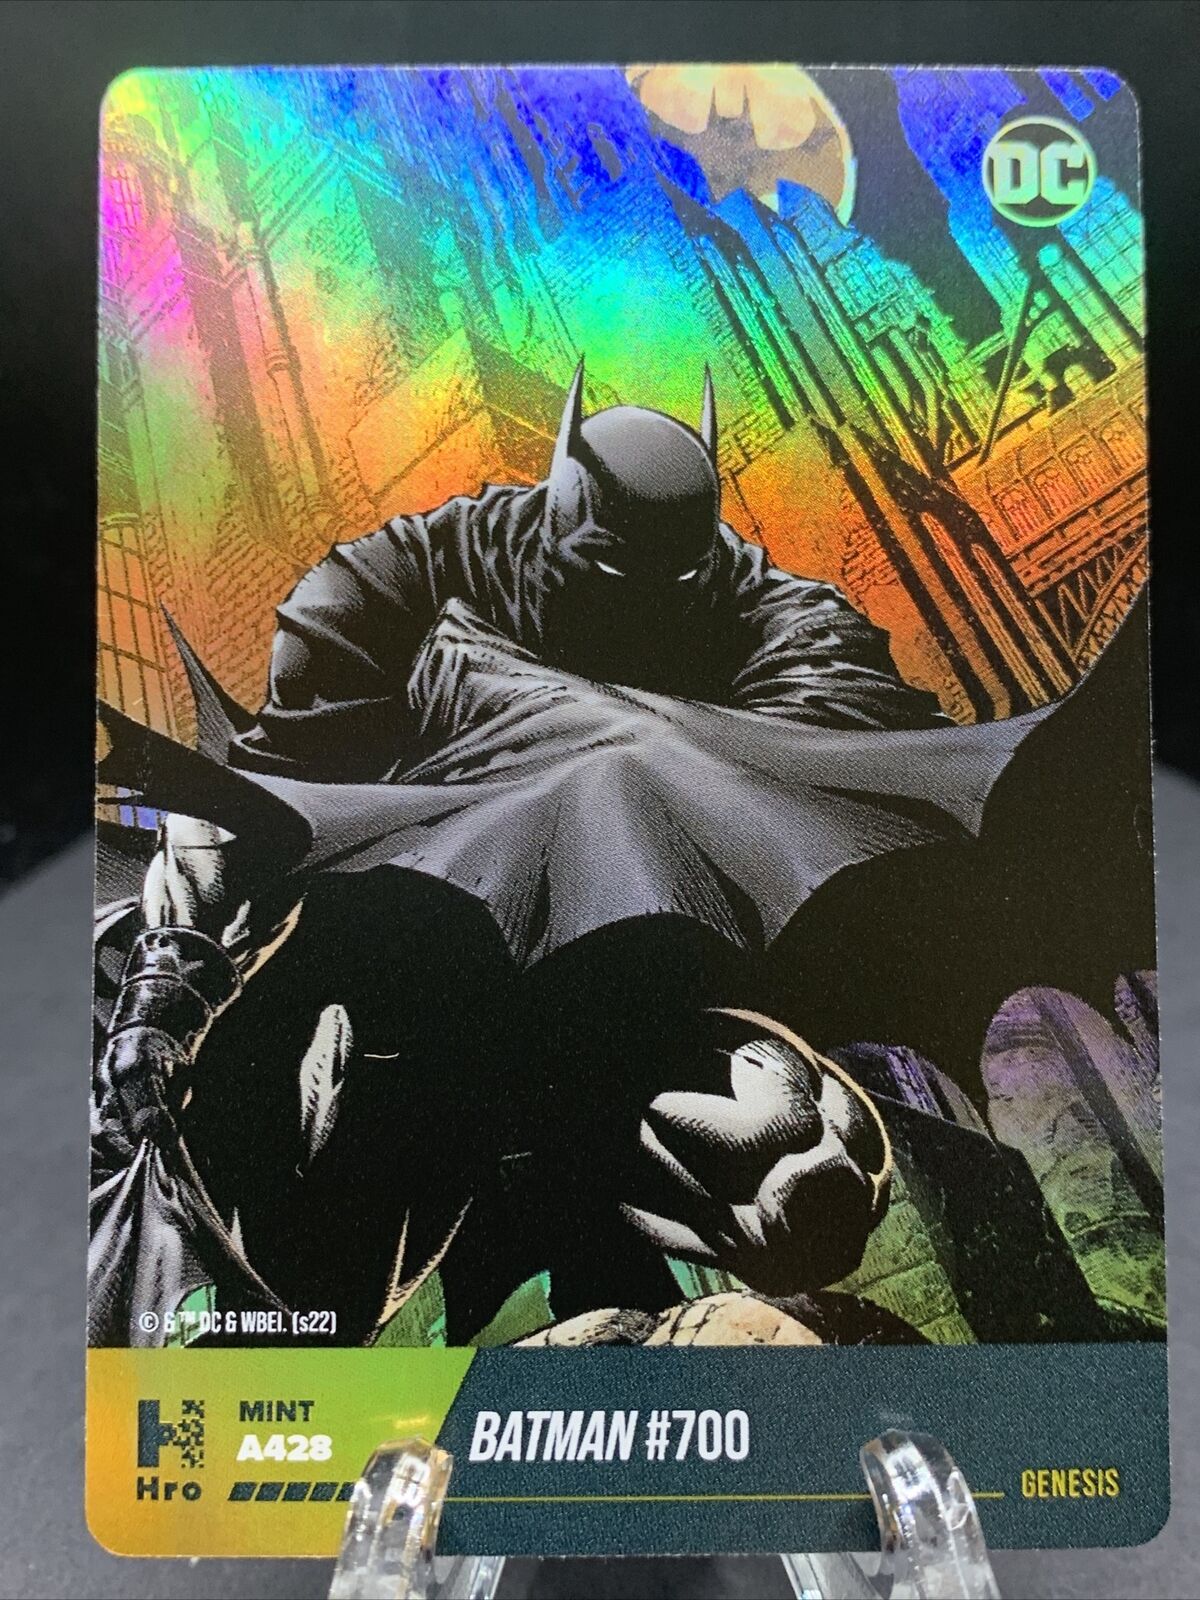 DC Hybrid Trading Card 2022 Chapter 1 Genesis Batman #700 Legendary Card #428